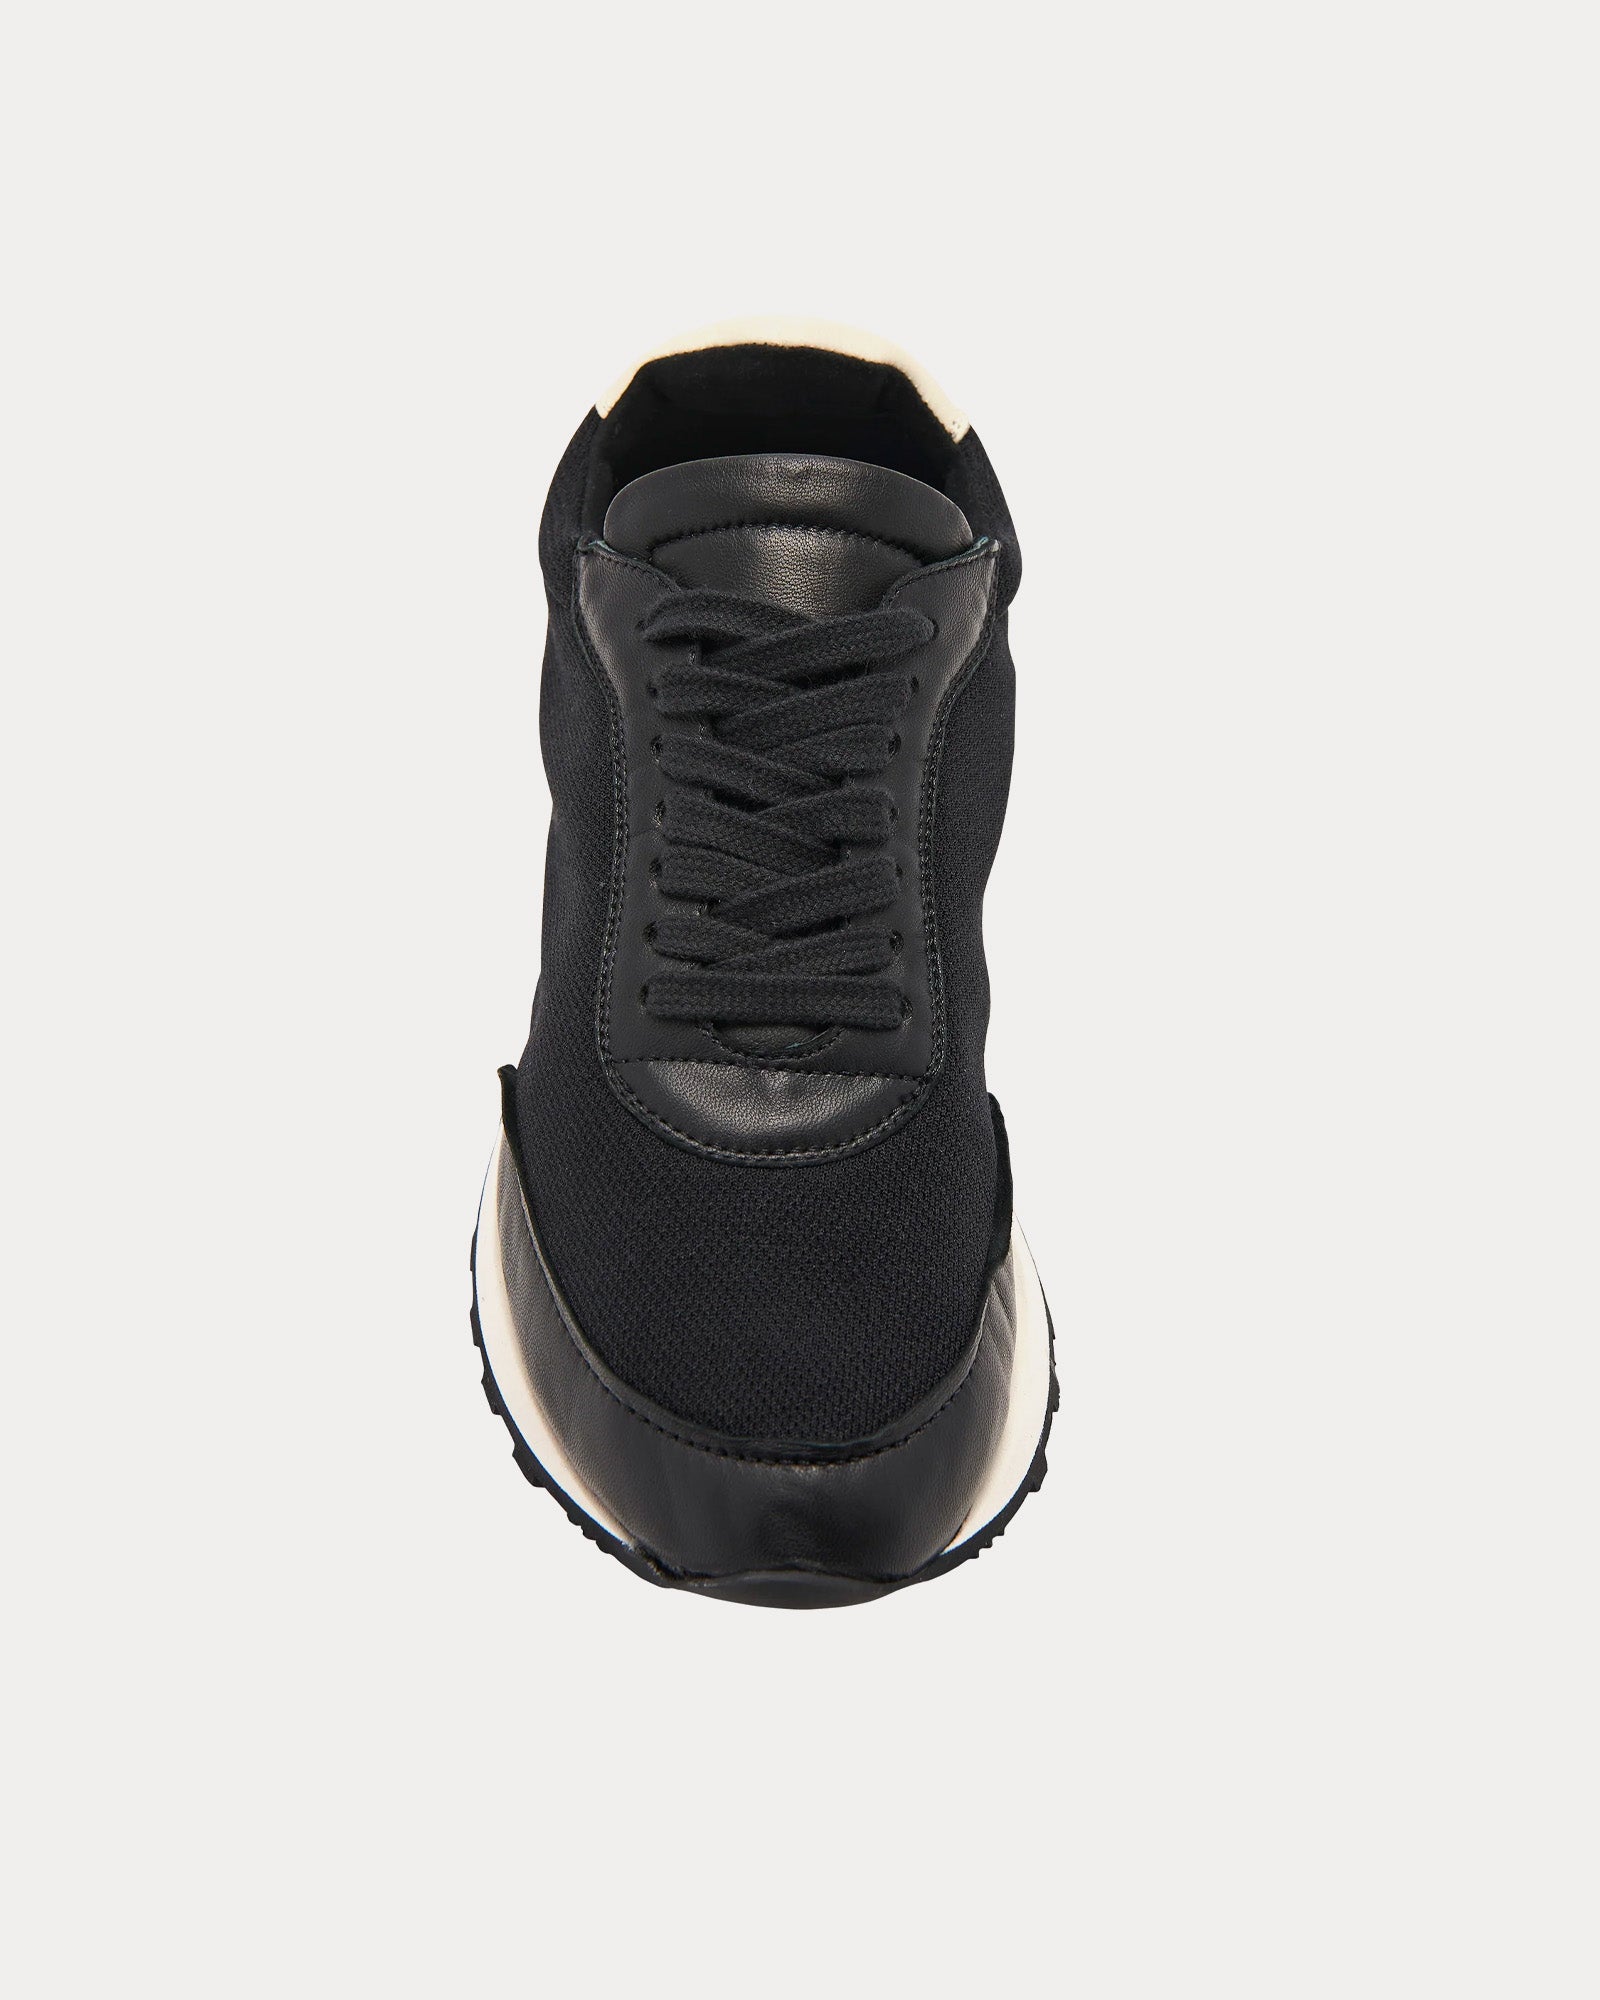 The Row - Owen Runner Leather & Nylon Black / White / Black Low Top Sneakers